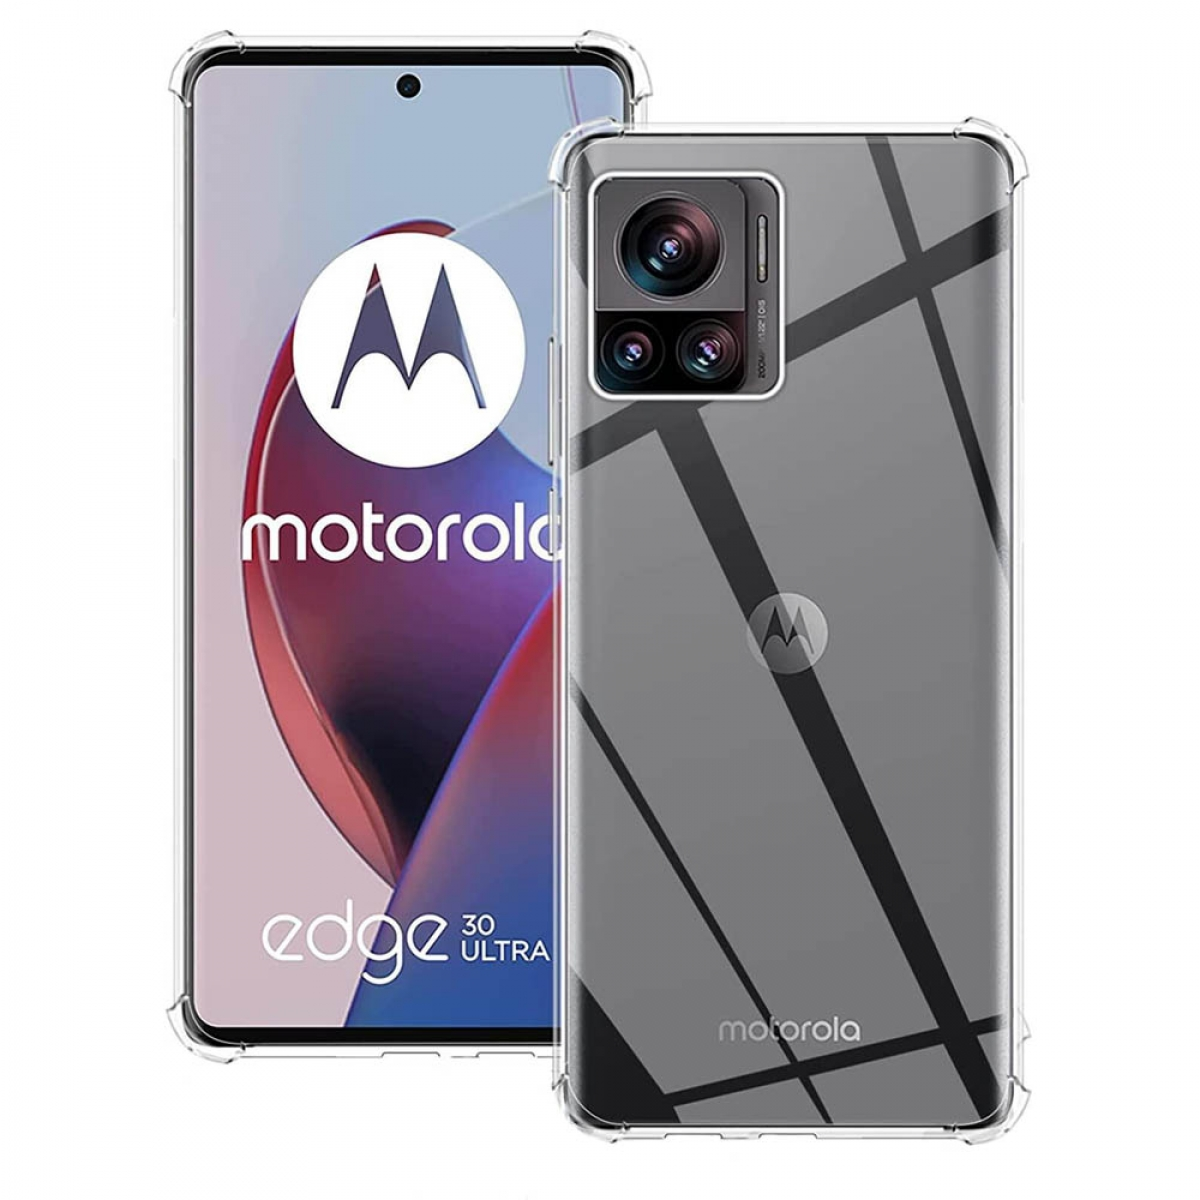 Backcover, 30 Ultra, Edge Motorola, Shockproof, CASEONLINE Transparent